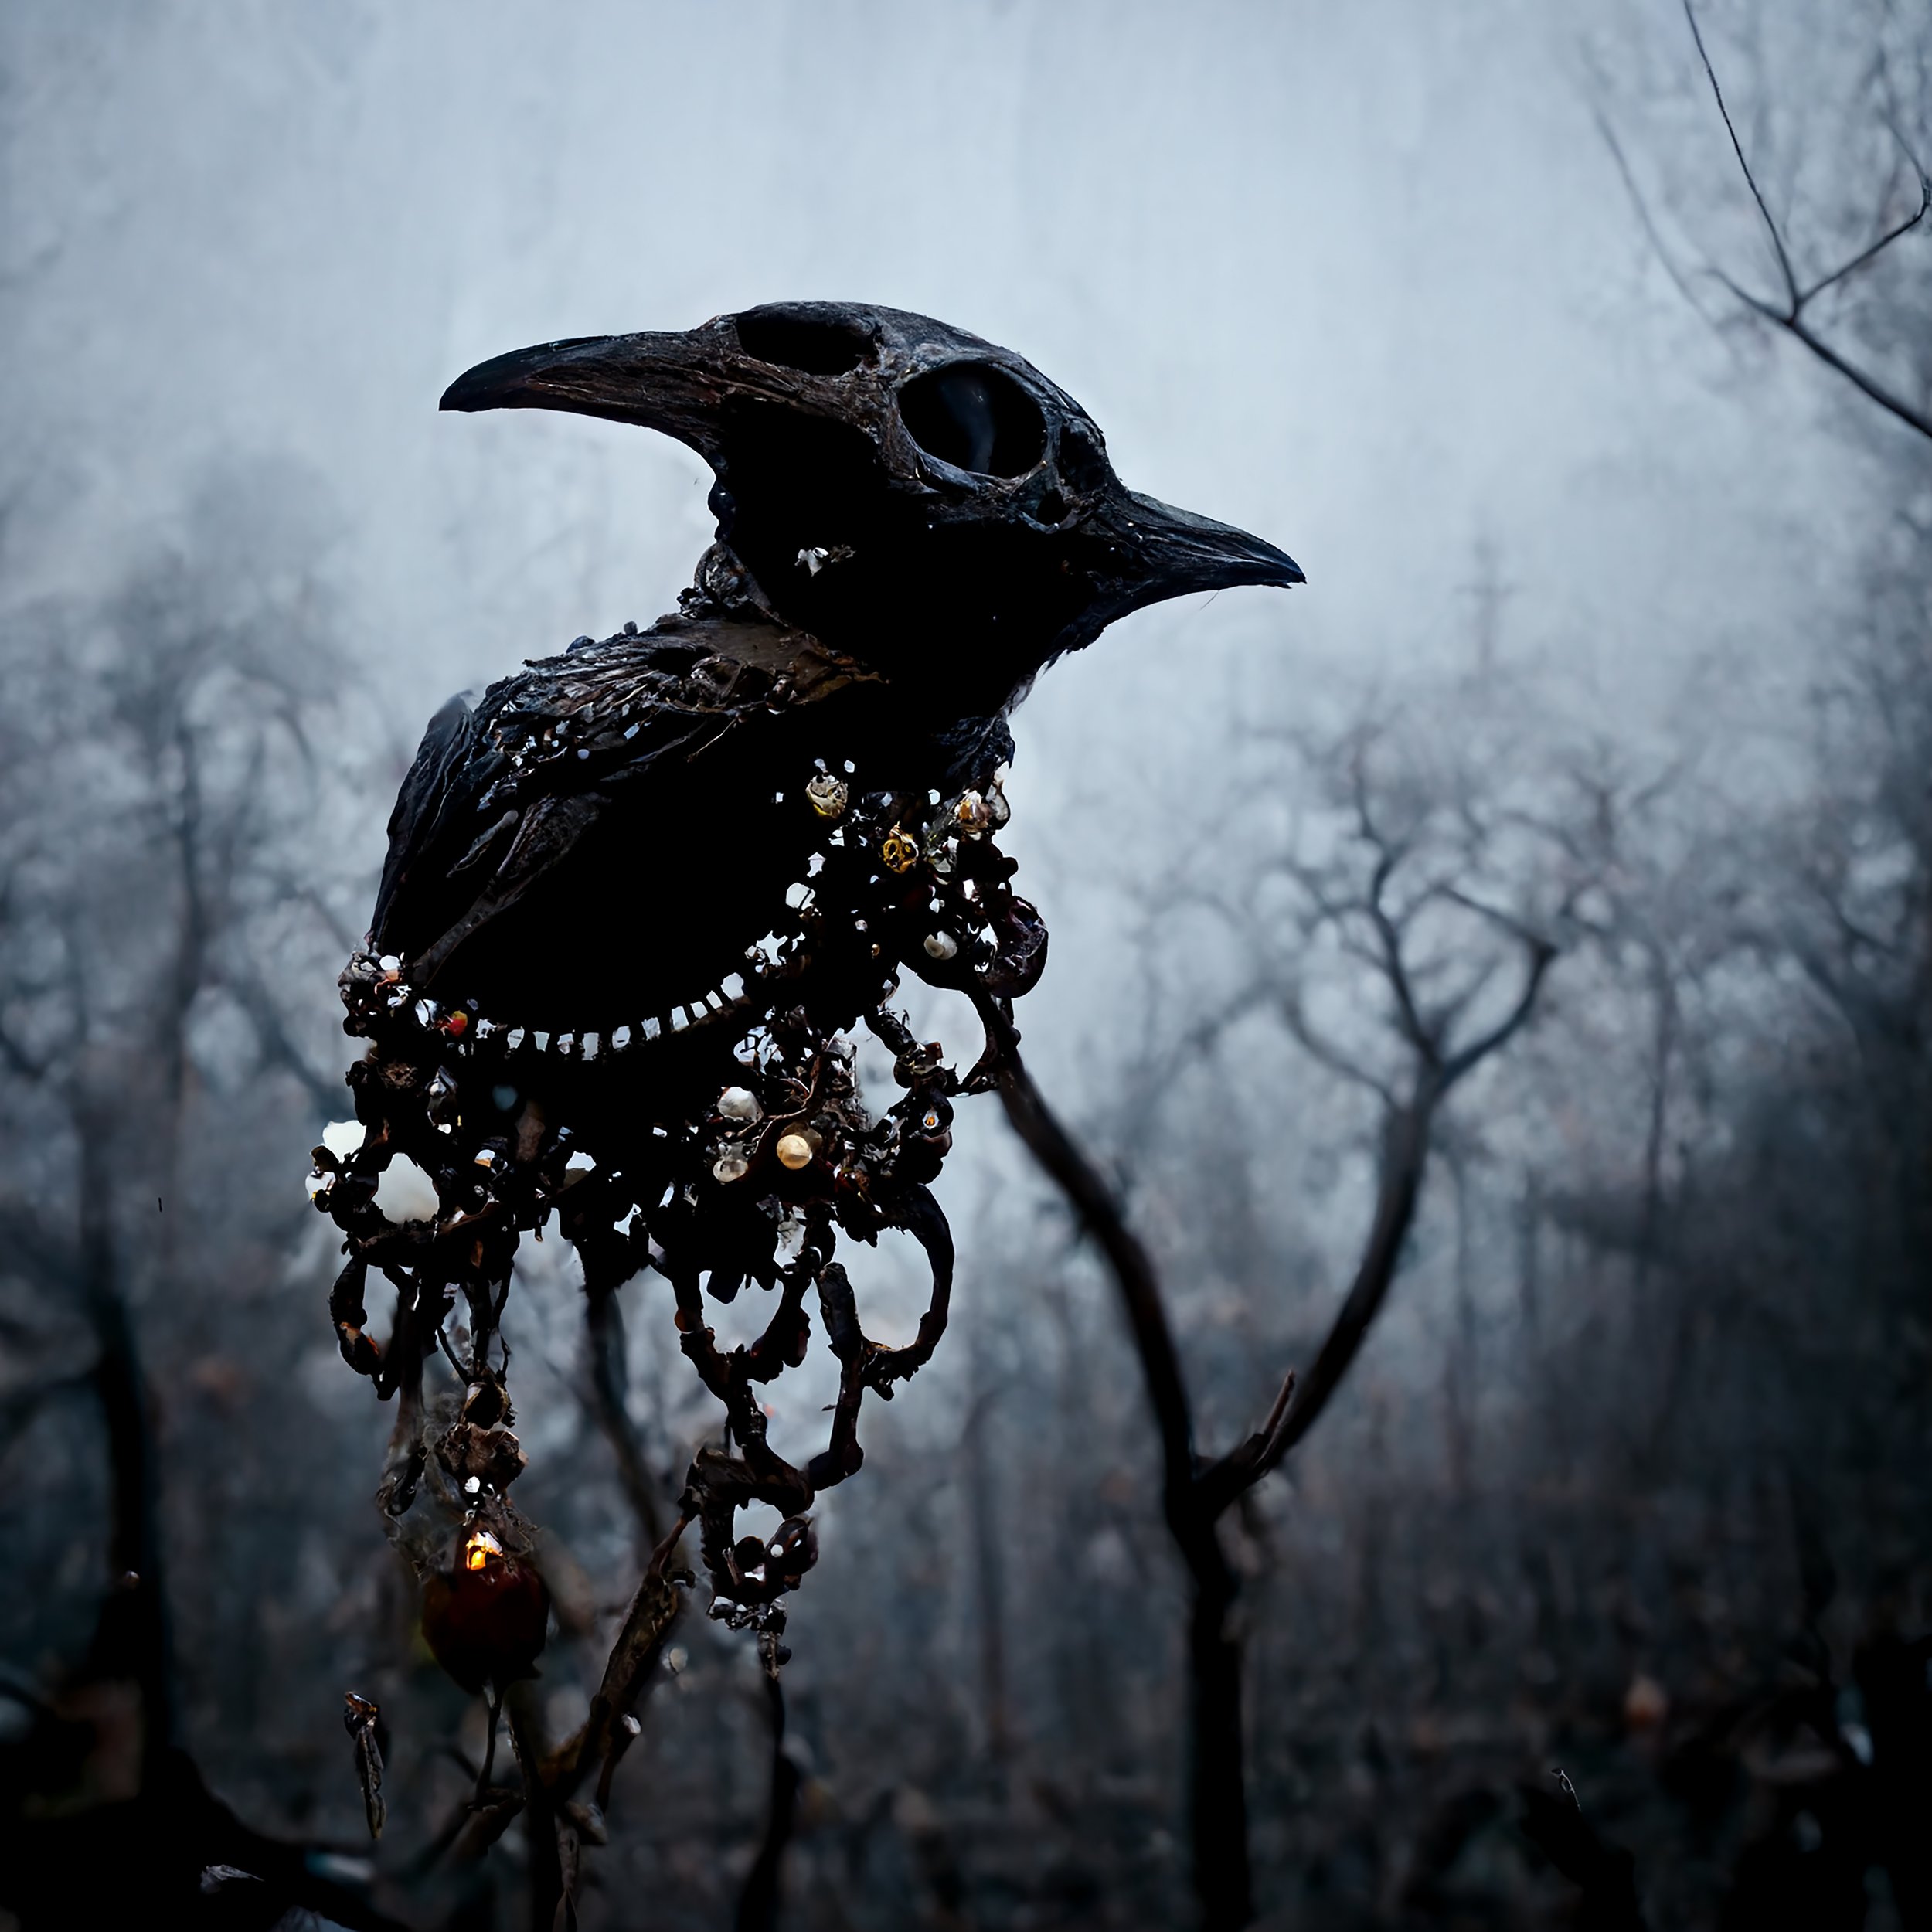 BrilliantImages_raven_skull_in_dark_forest_fog_pearls_chains_f04f209c-a599-4c7d-9c80-cbd0a27bee5b copy.jpg